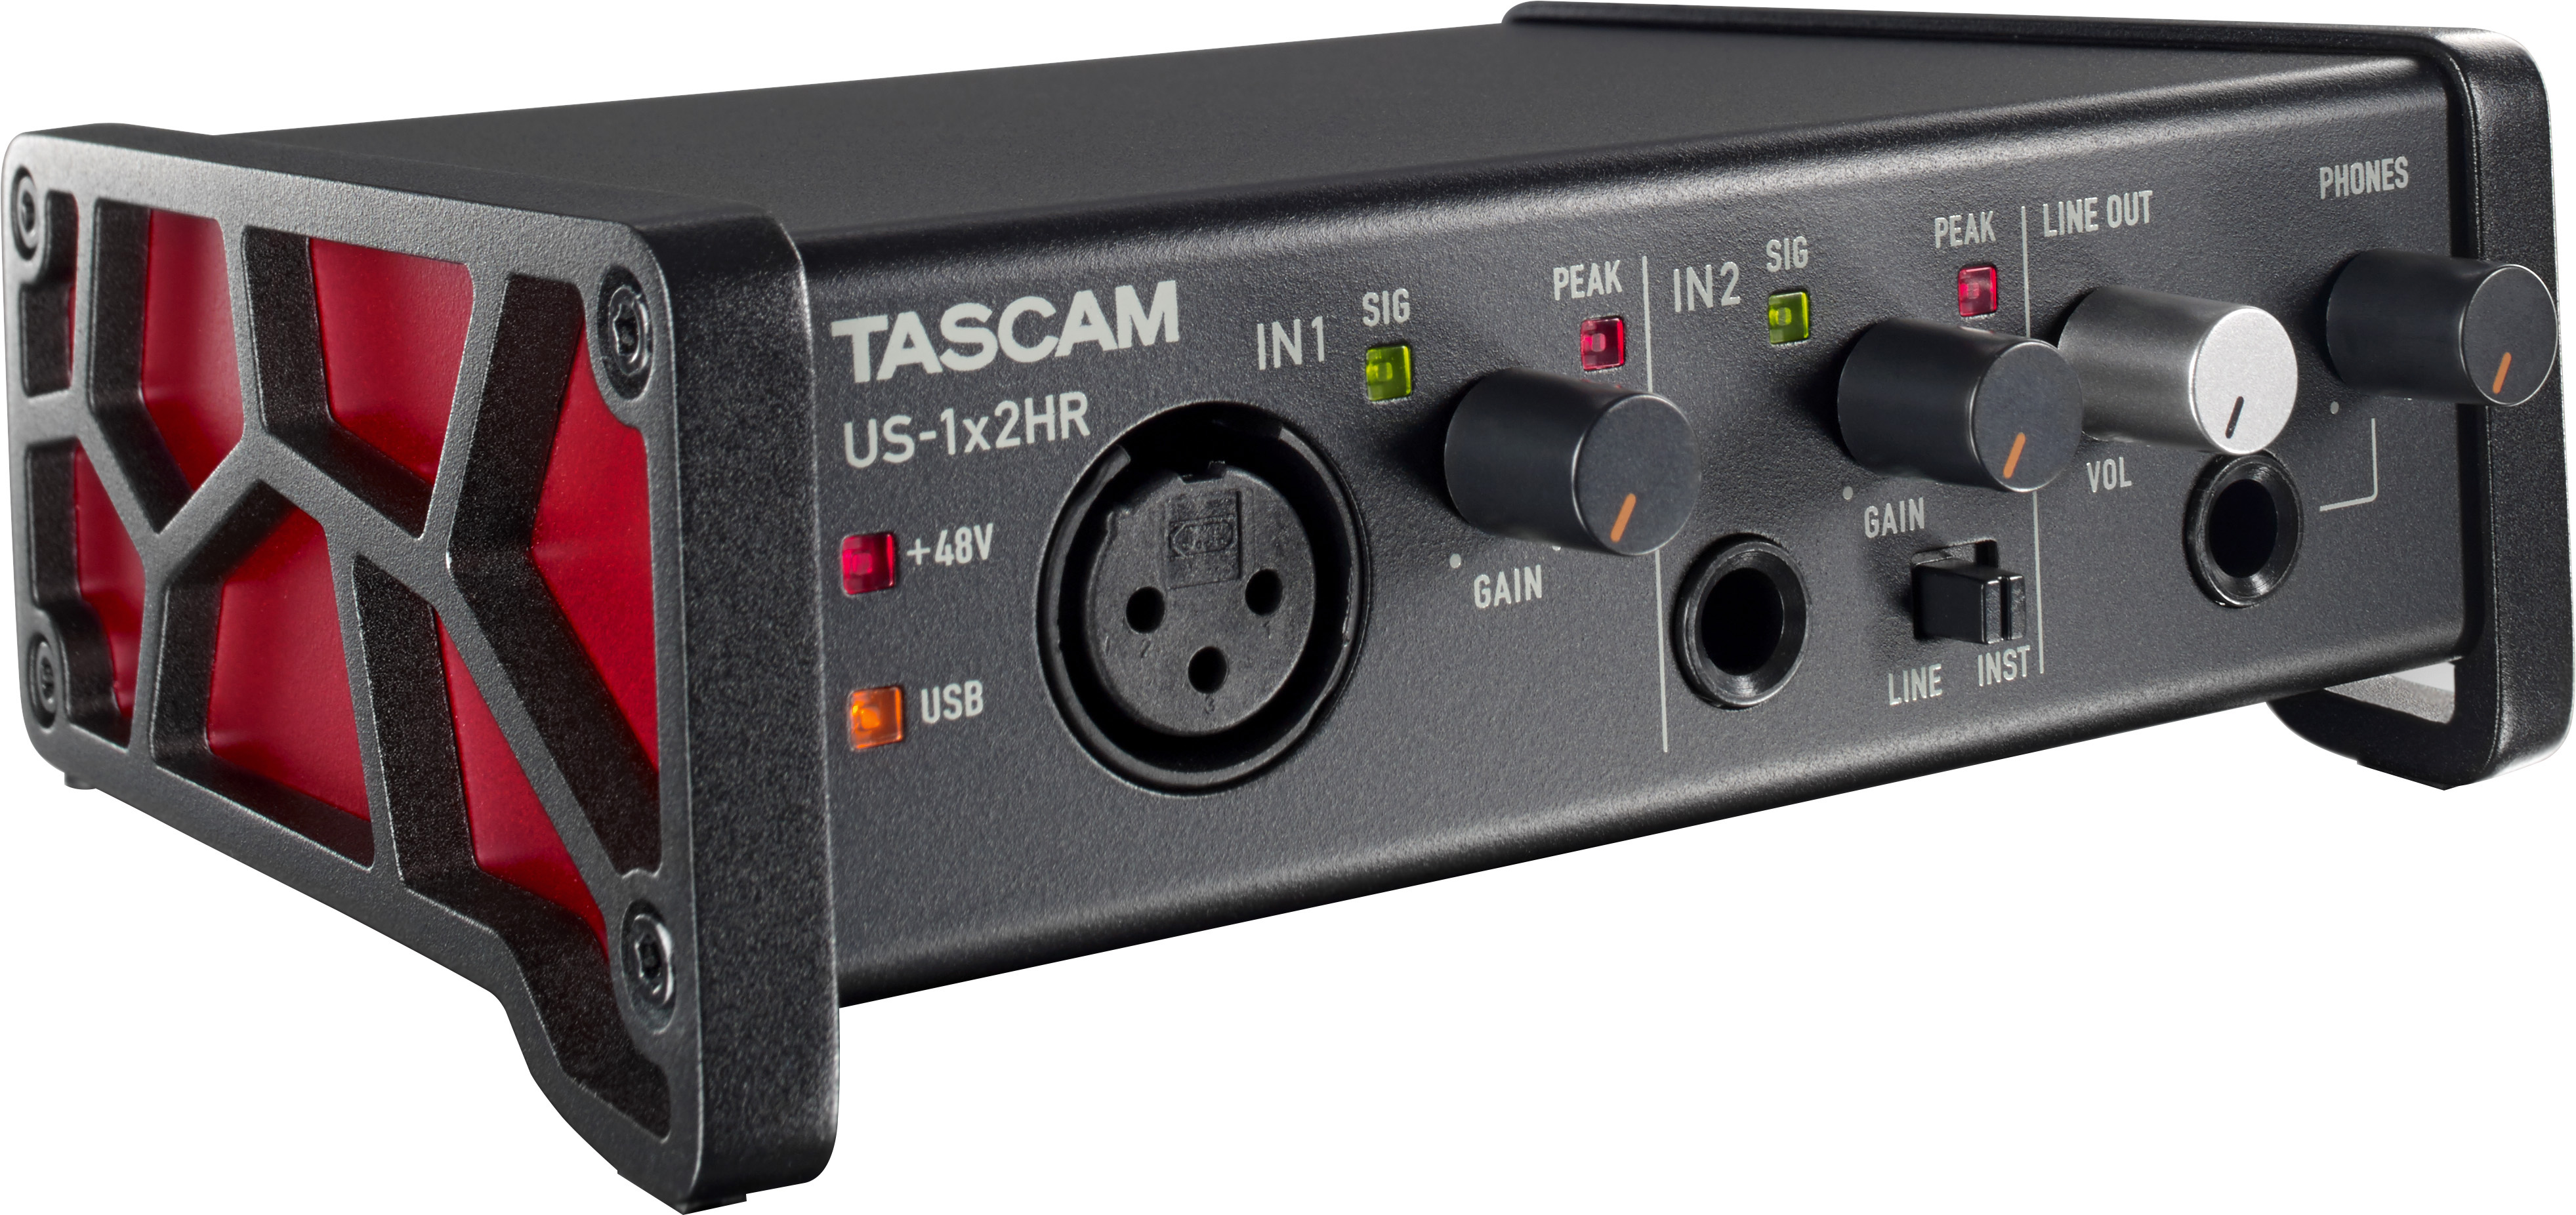 Tascam Us-1x2hr - USB audio interface - Variation 1